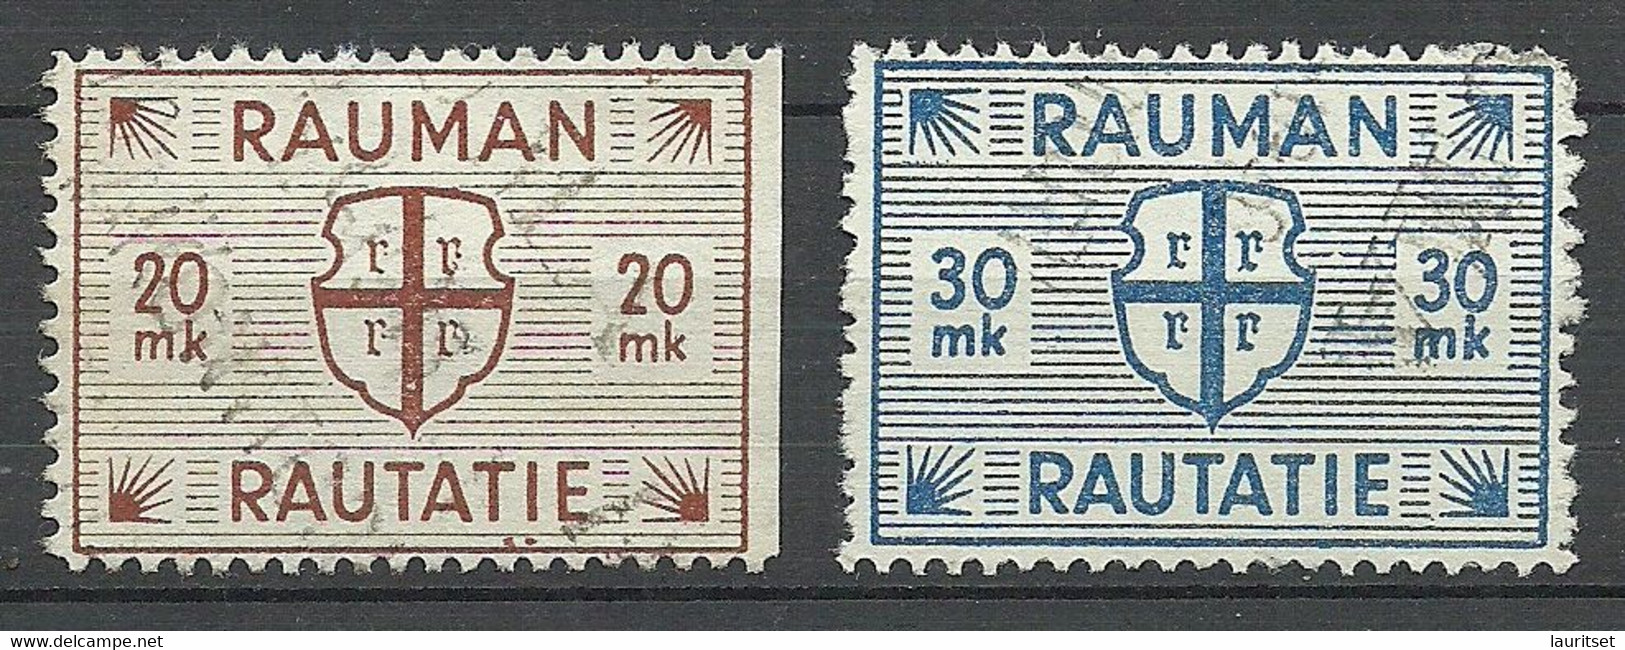 FINLAND FINNLAND 1945 RAUMA Railway Stamps 20 & 30 MK O - Paketmarken